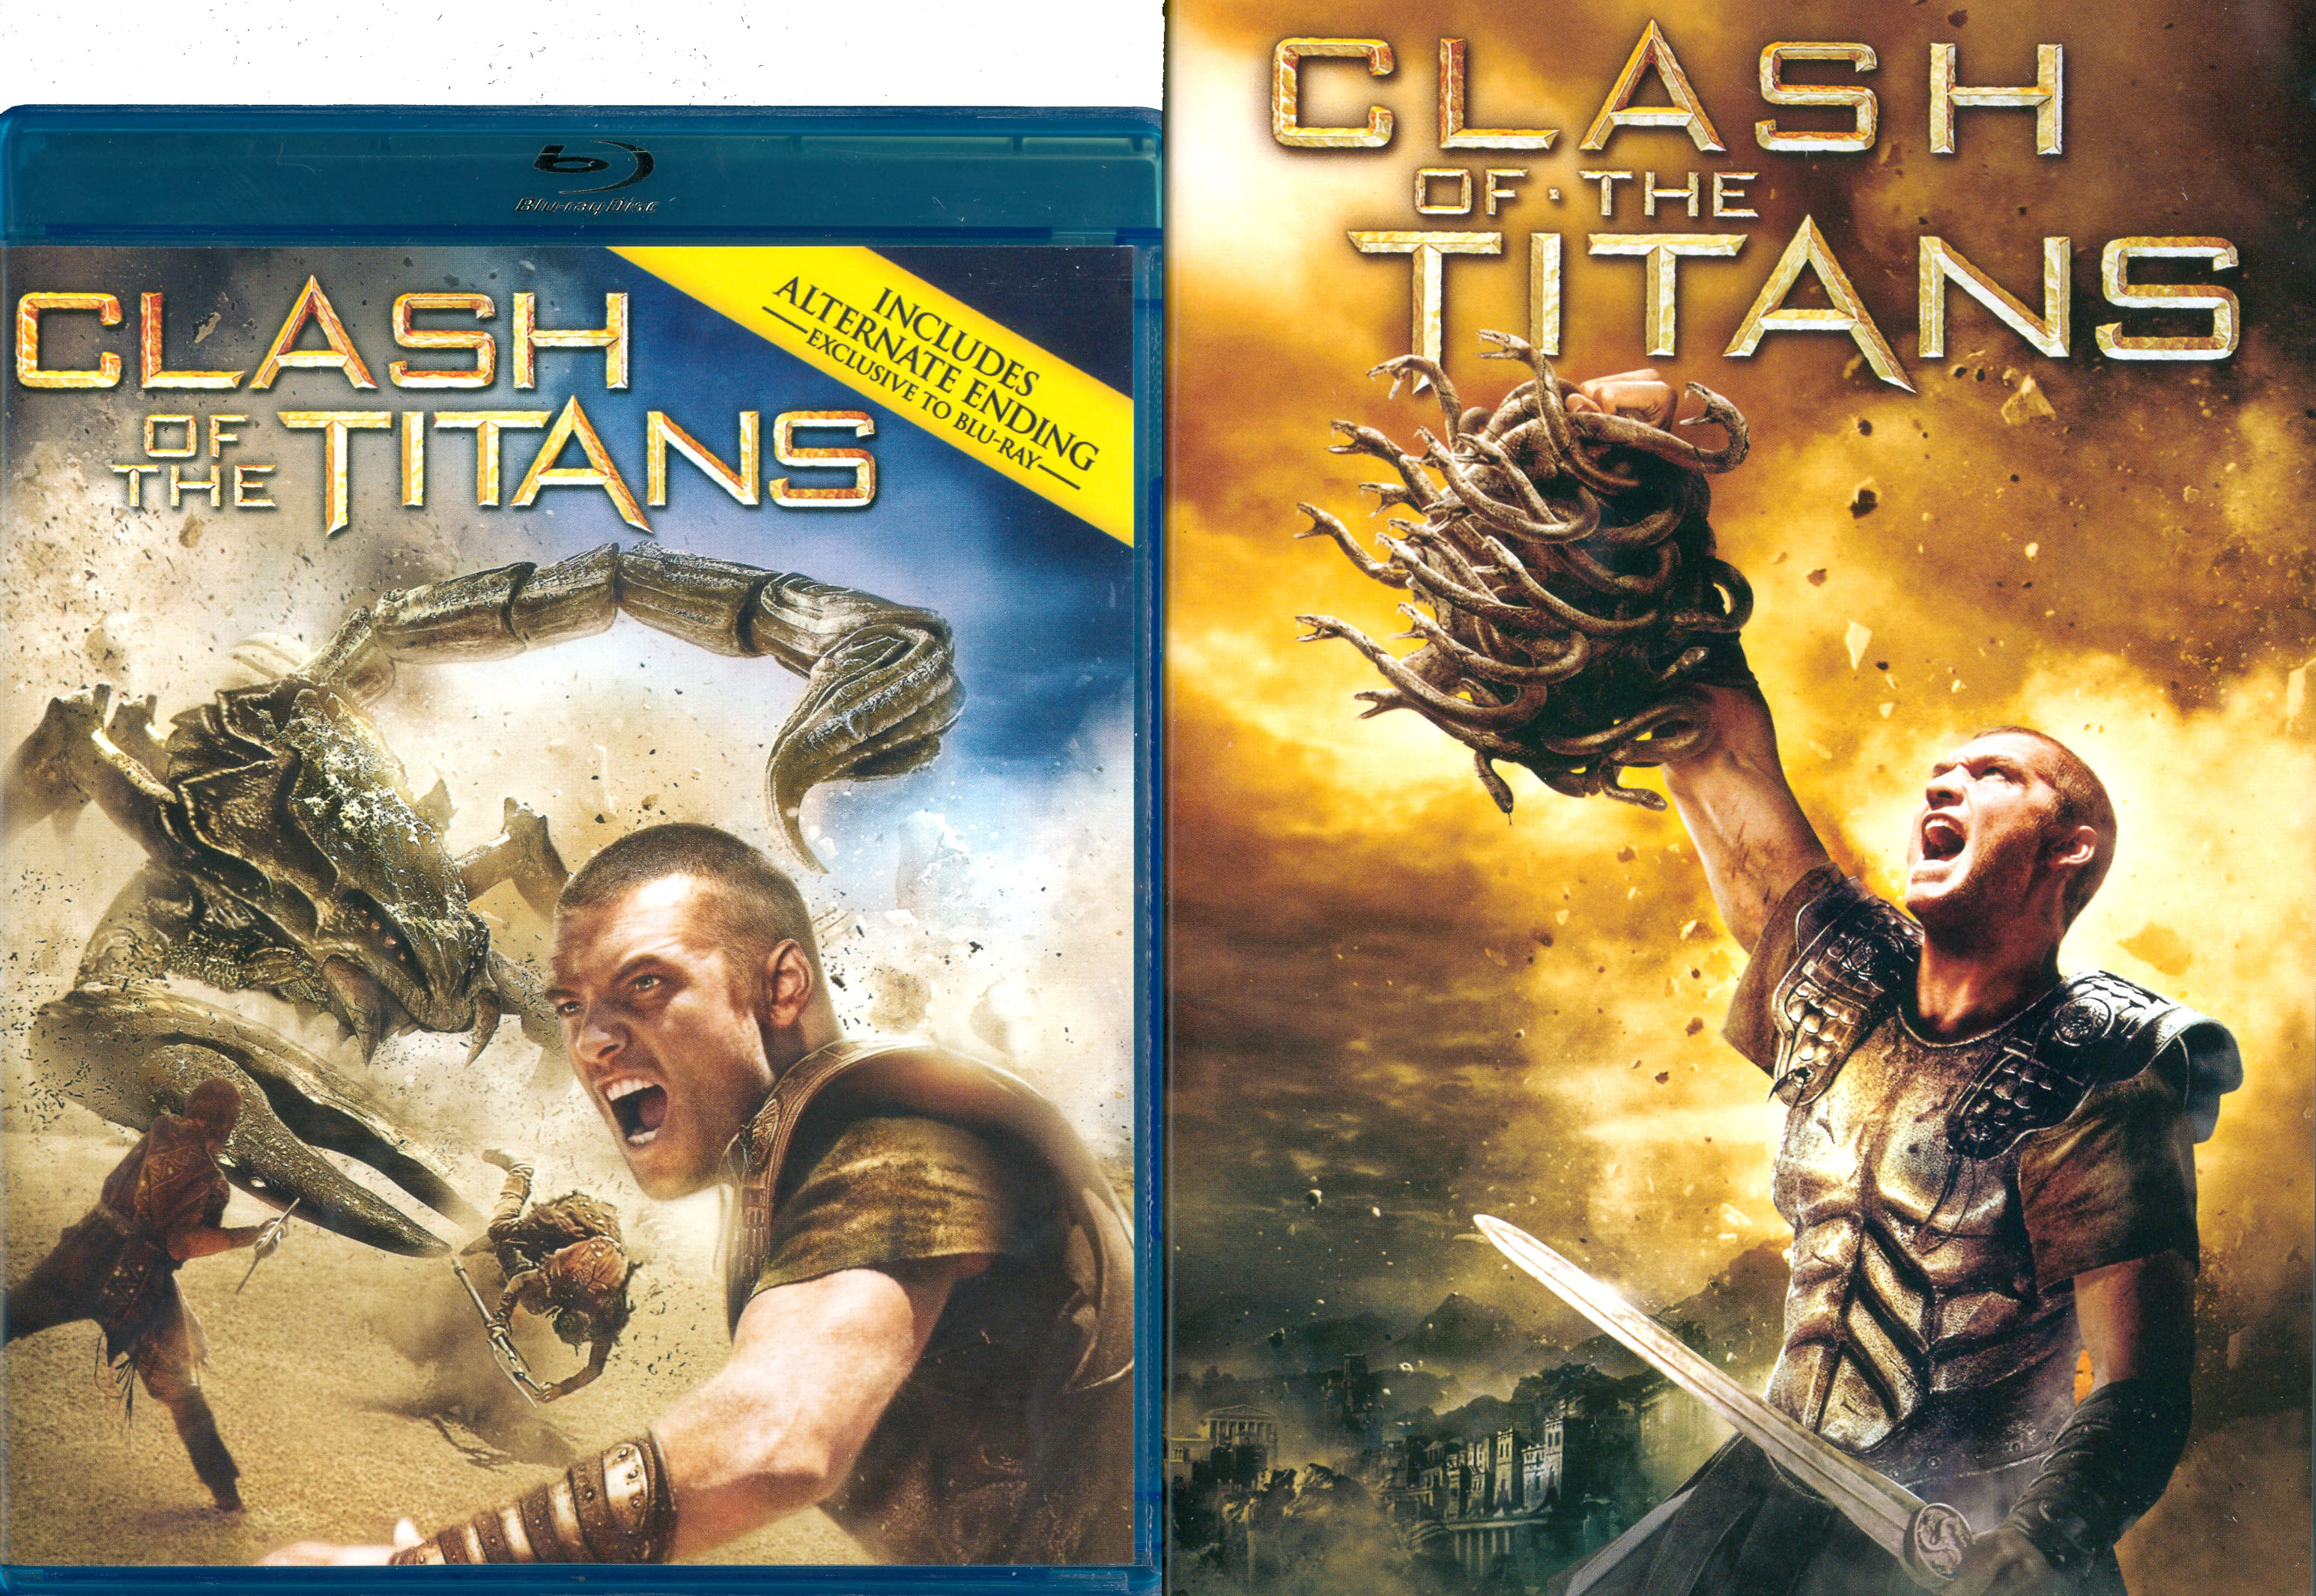 Clash of Titans [2 Discs] [Blu-ray/DVD] [1981] - Best Buy